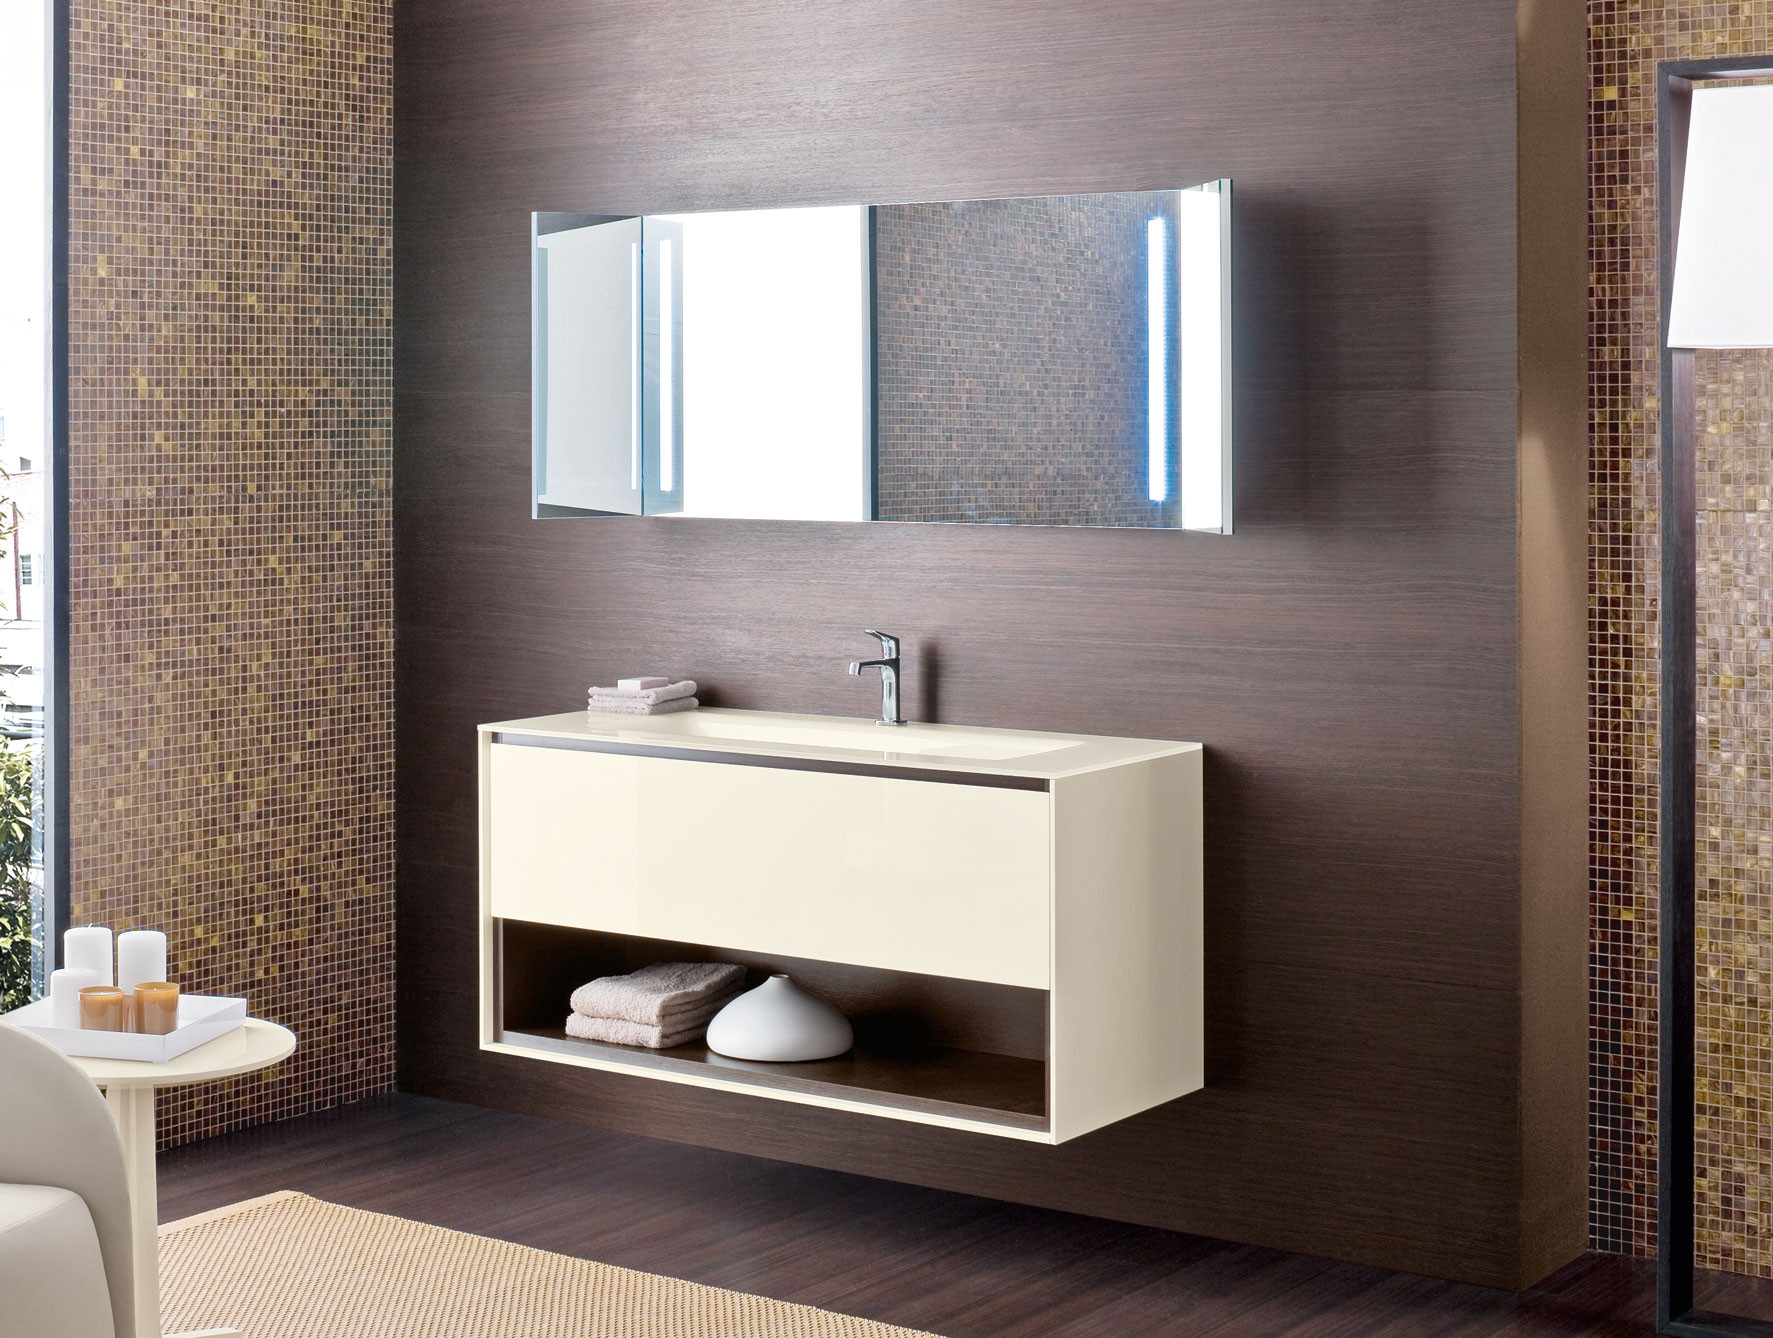 Designer Bathroom Vanities
 Frame FR4 Modern Italian Designer Bathroom Furniture in